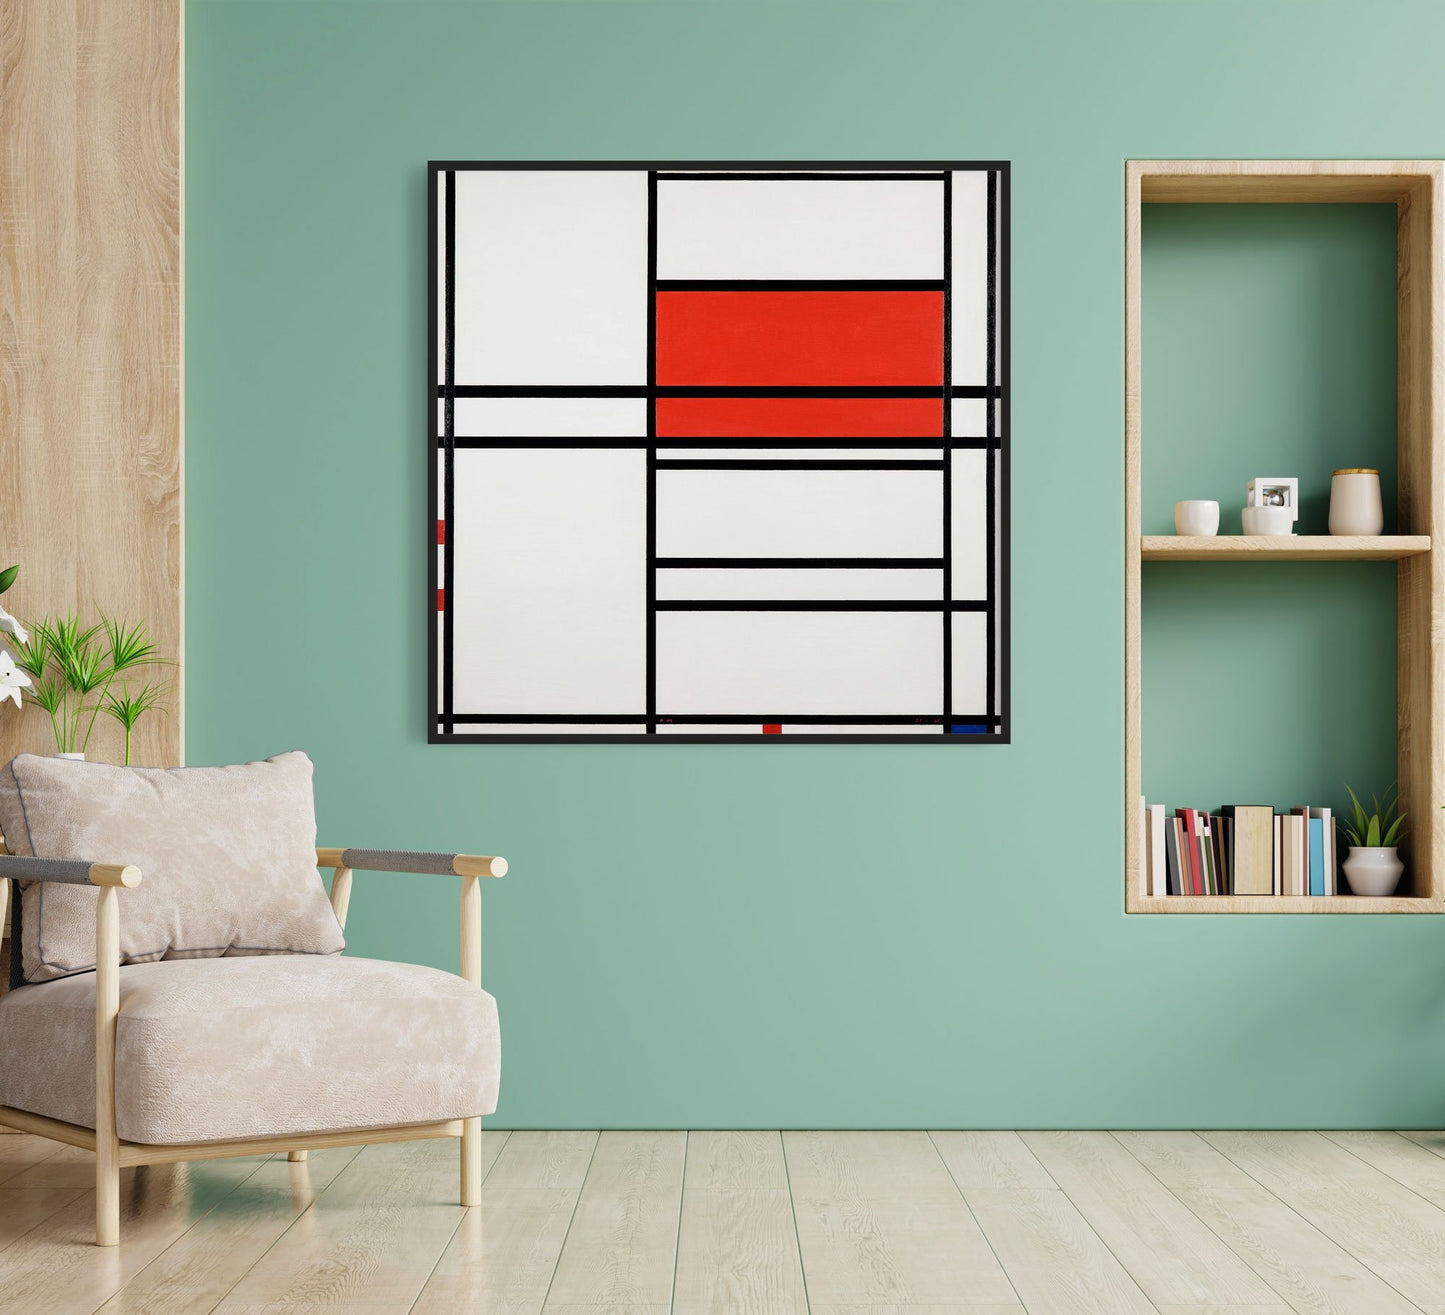 Composition No. 4  By Piet Mondrian